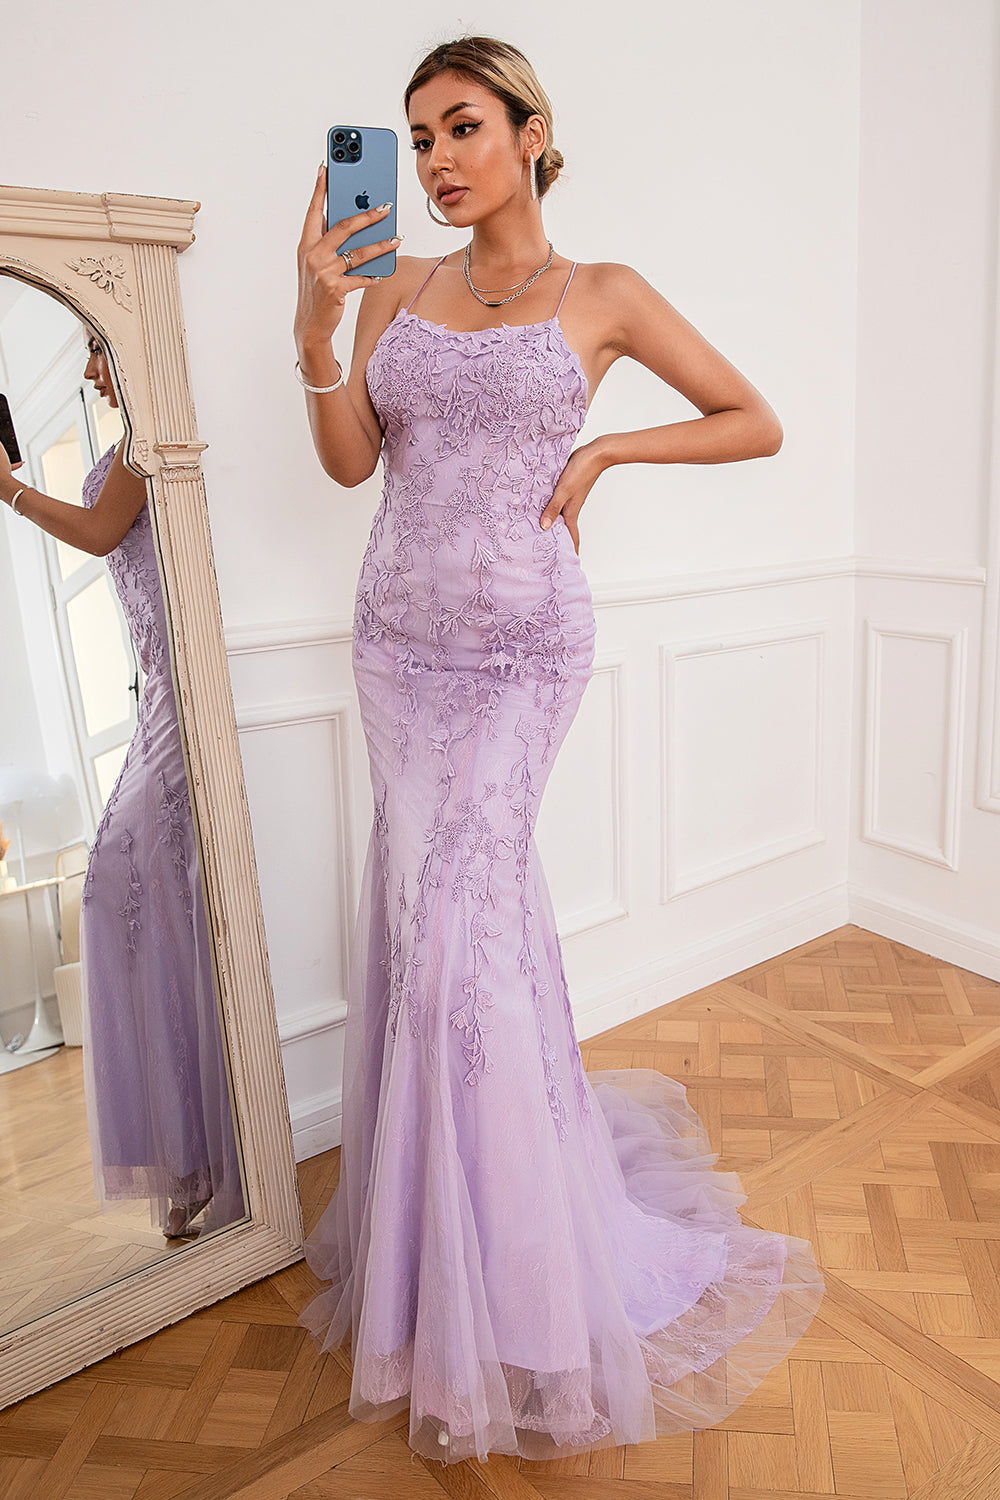 Zapaka Women Mermaid Prom Dress Light Spaghetti Straps Backless Evening Dress with – ZAPAKA